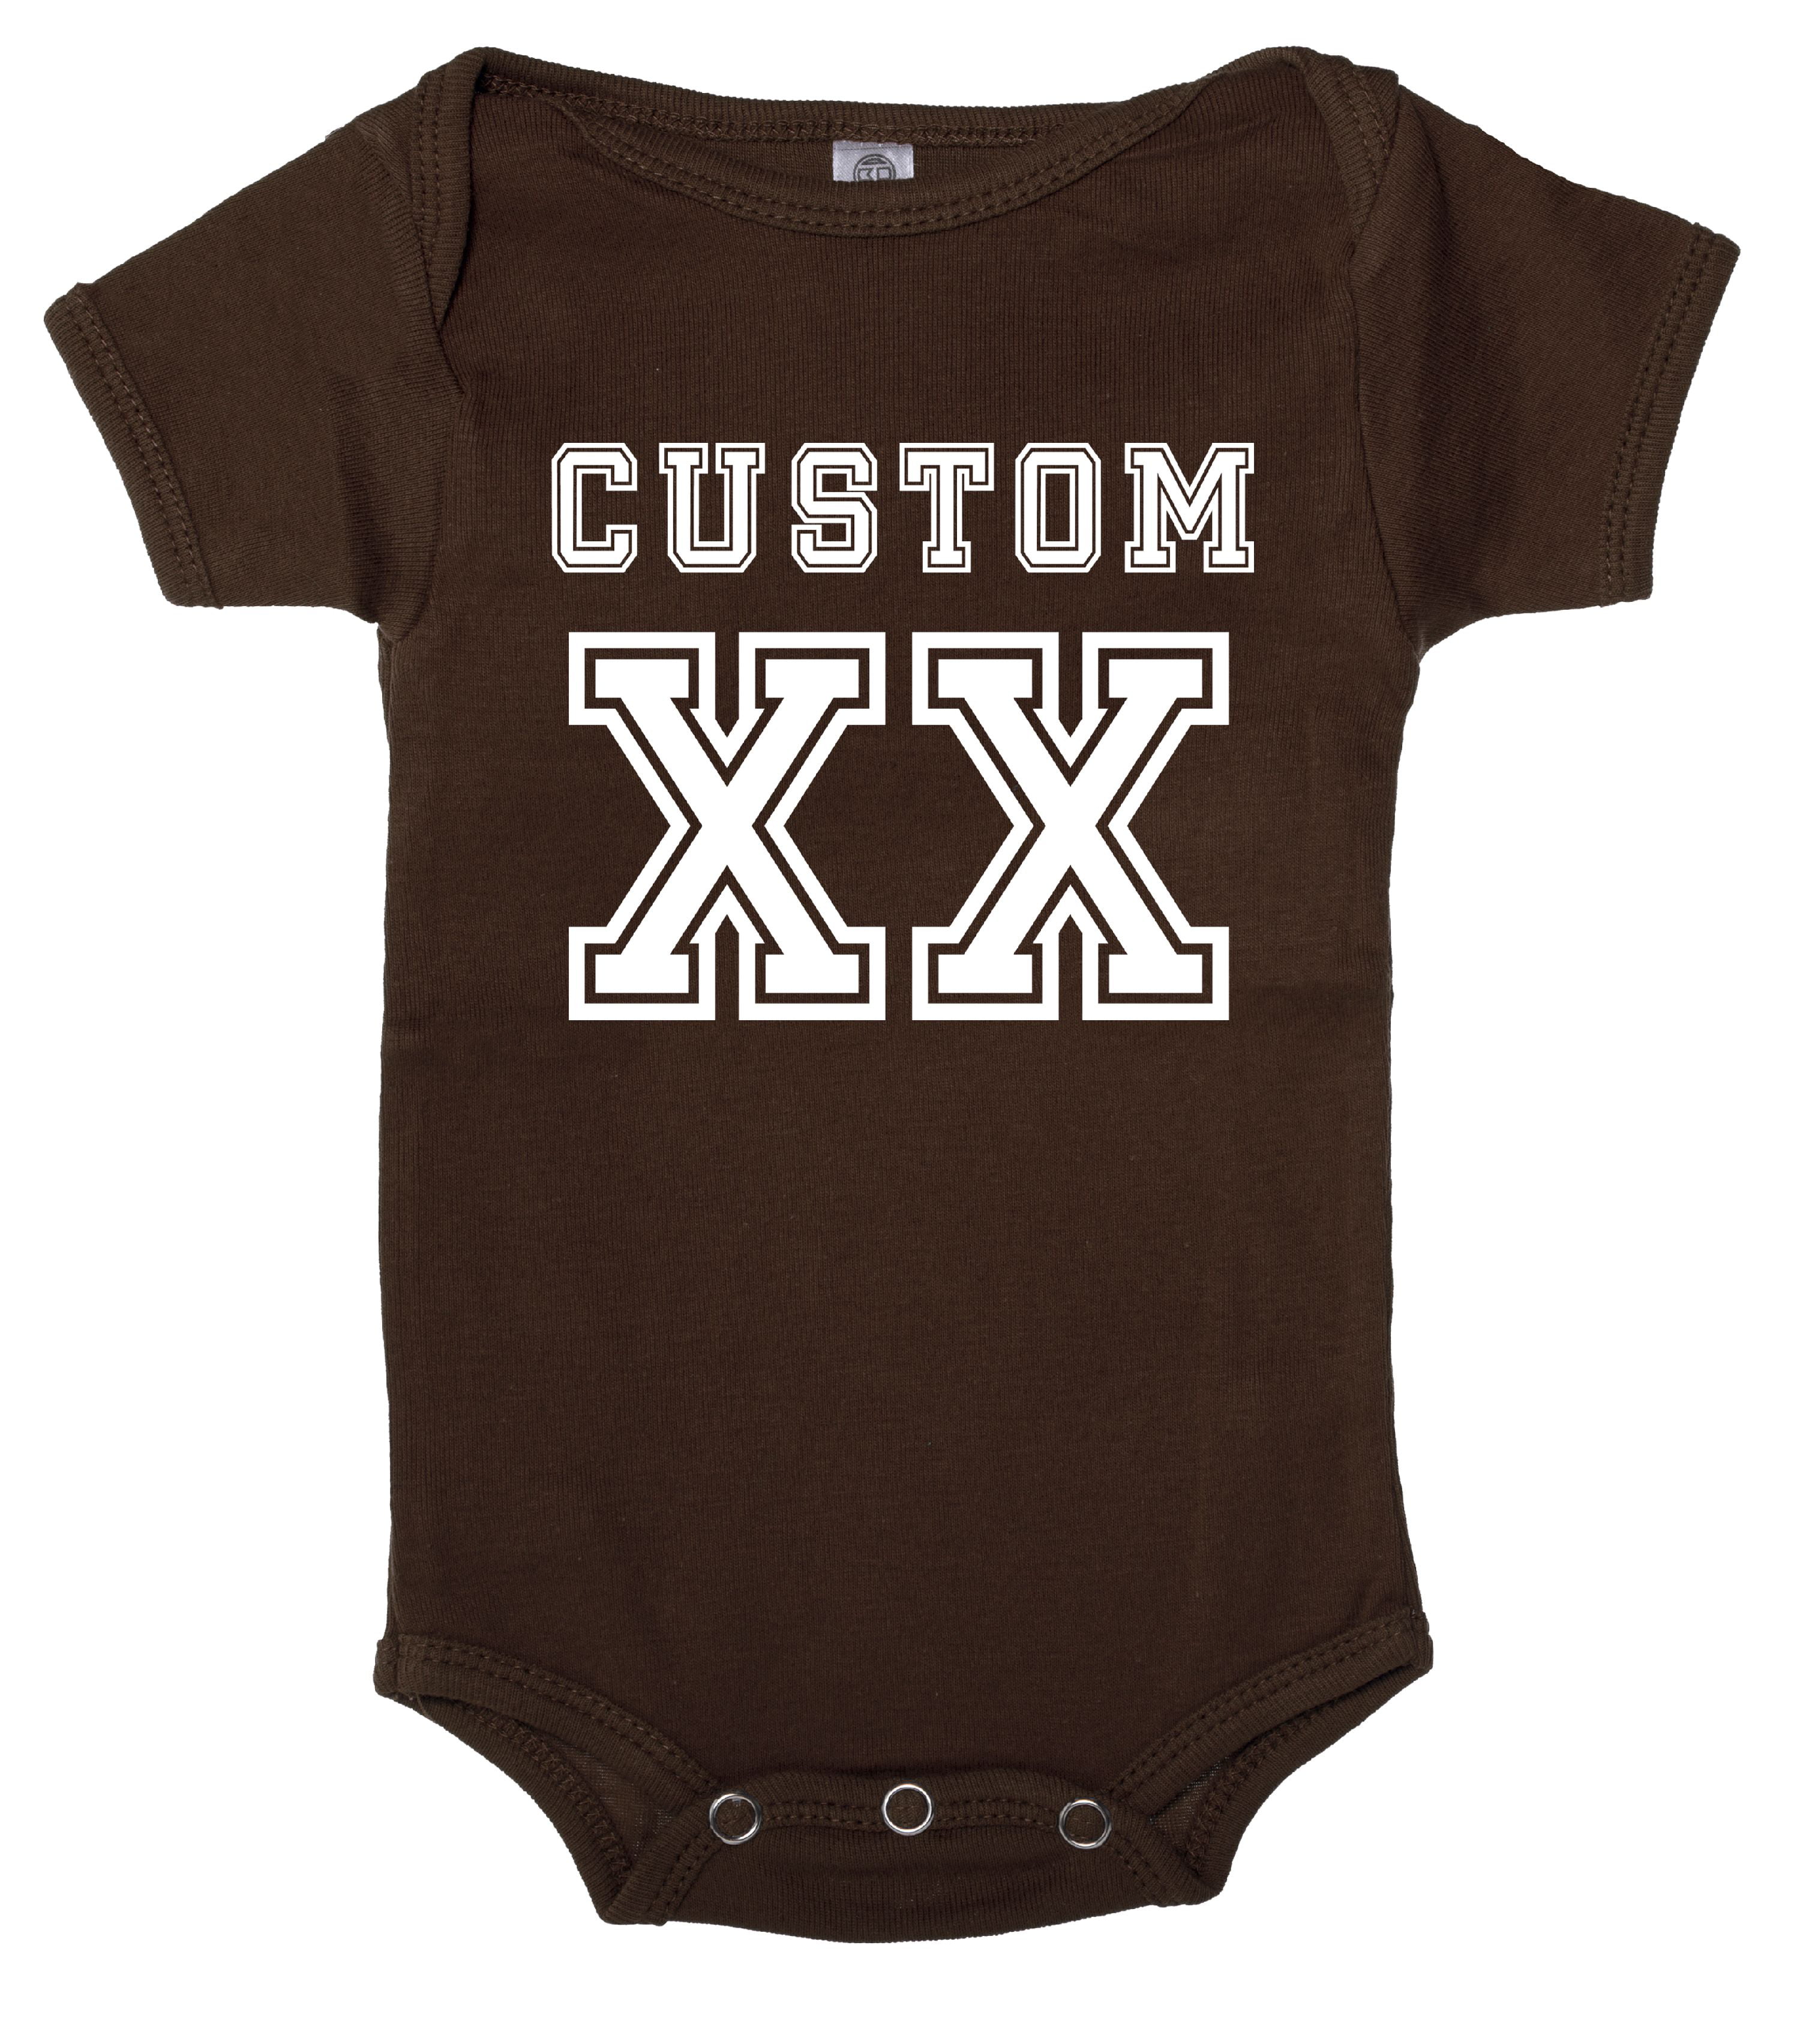 Personalized Infant BodysuitOne Piece Custom Made